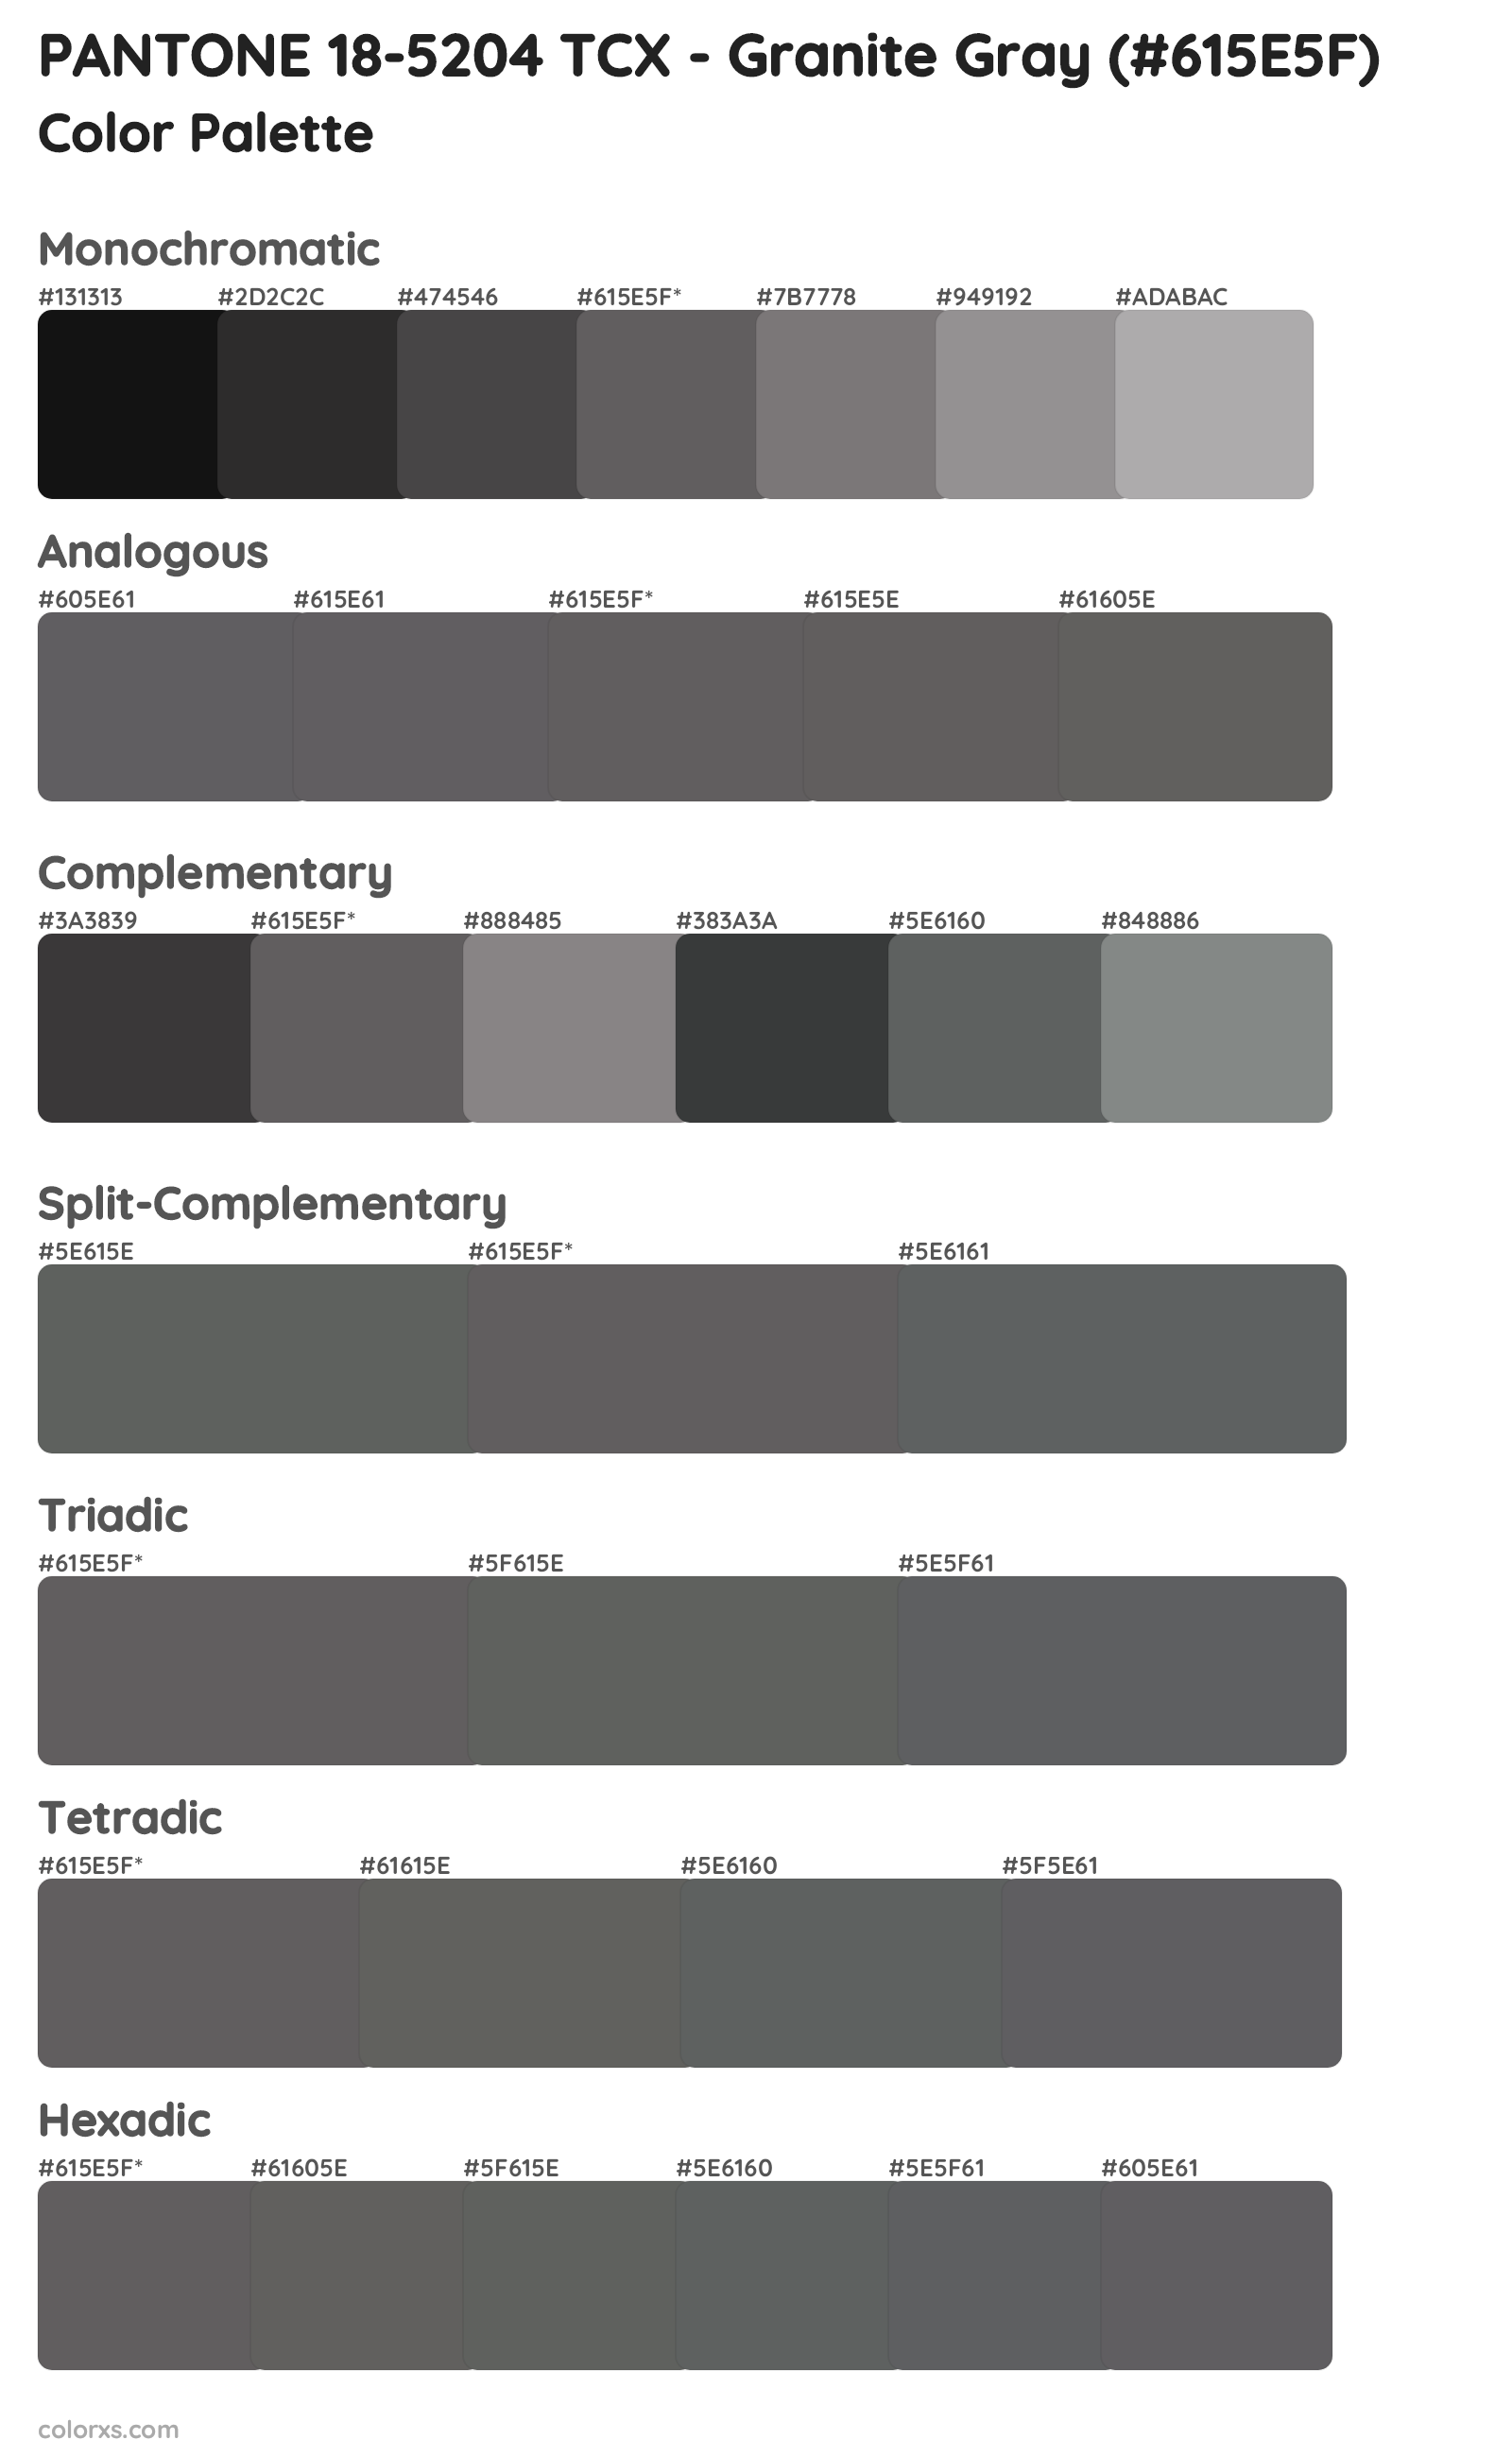 PANTONE 18-5204 TCX - Granite Gray Color Scheme Palettes